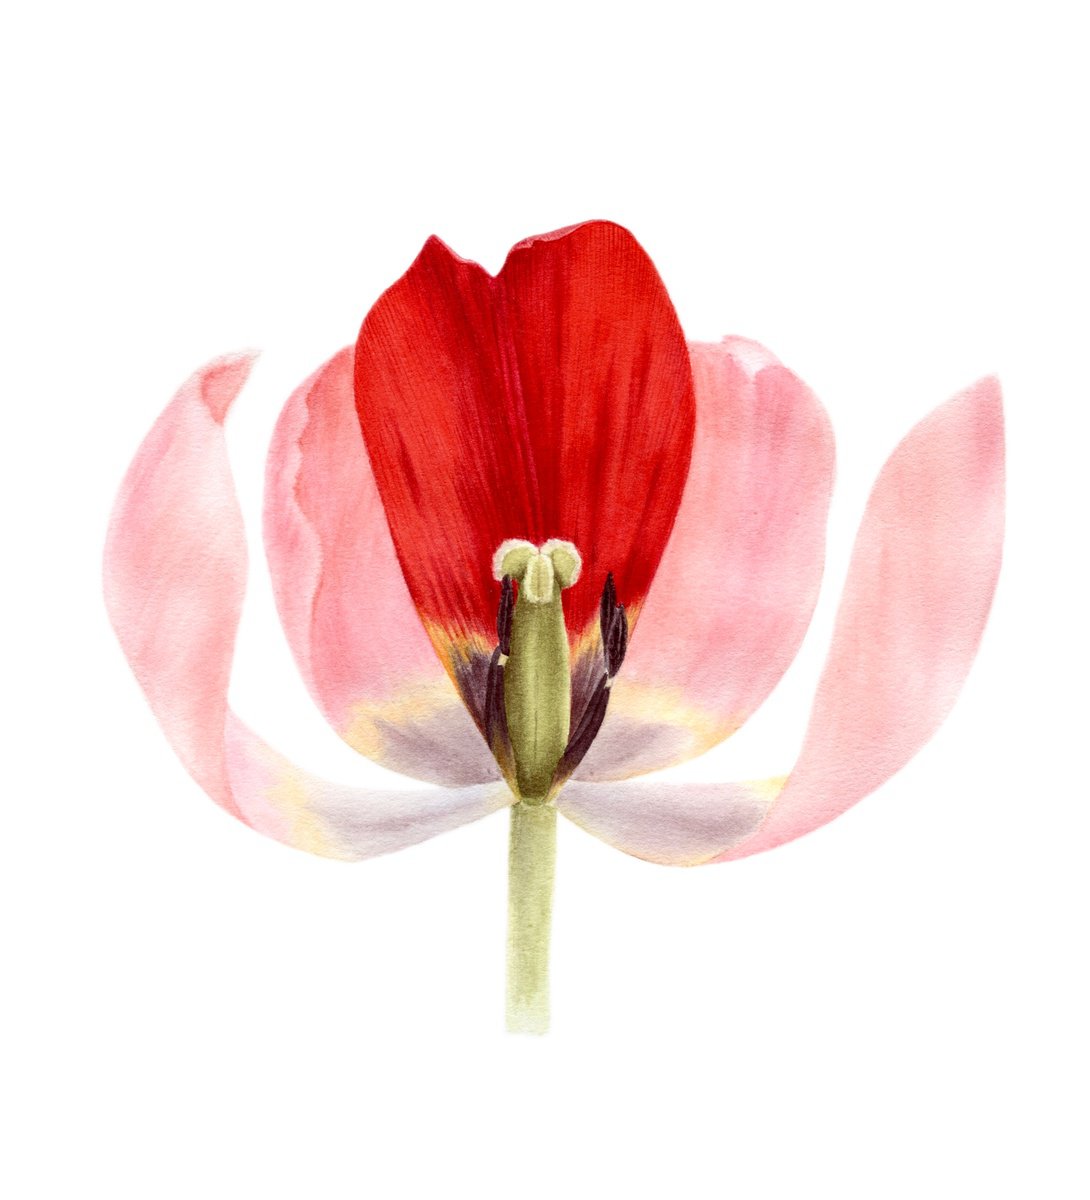 Red tulip petal art by Alona Hrinchuk